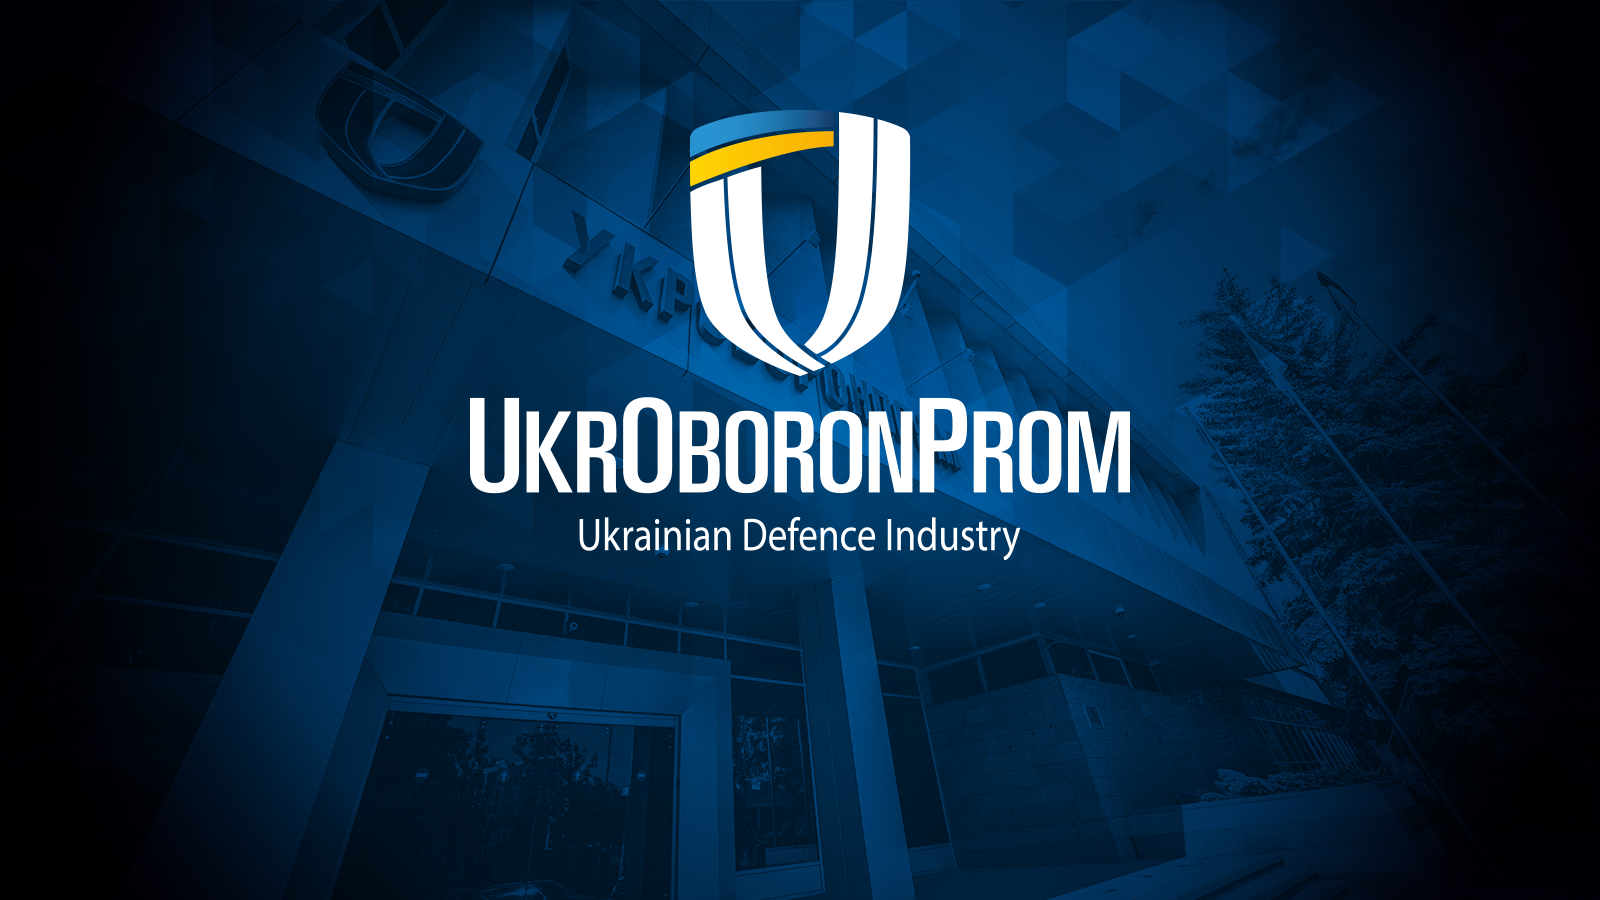 Ukraine's leaders to participate at International Defense Investment Forum